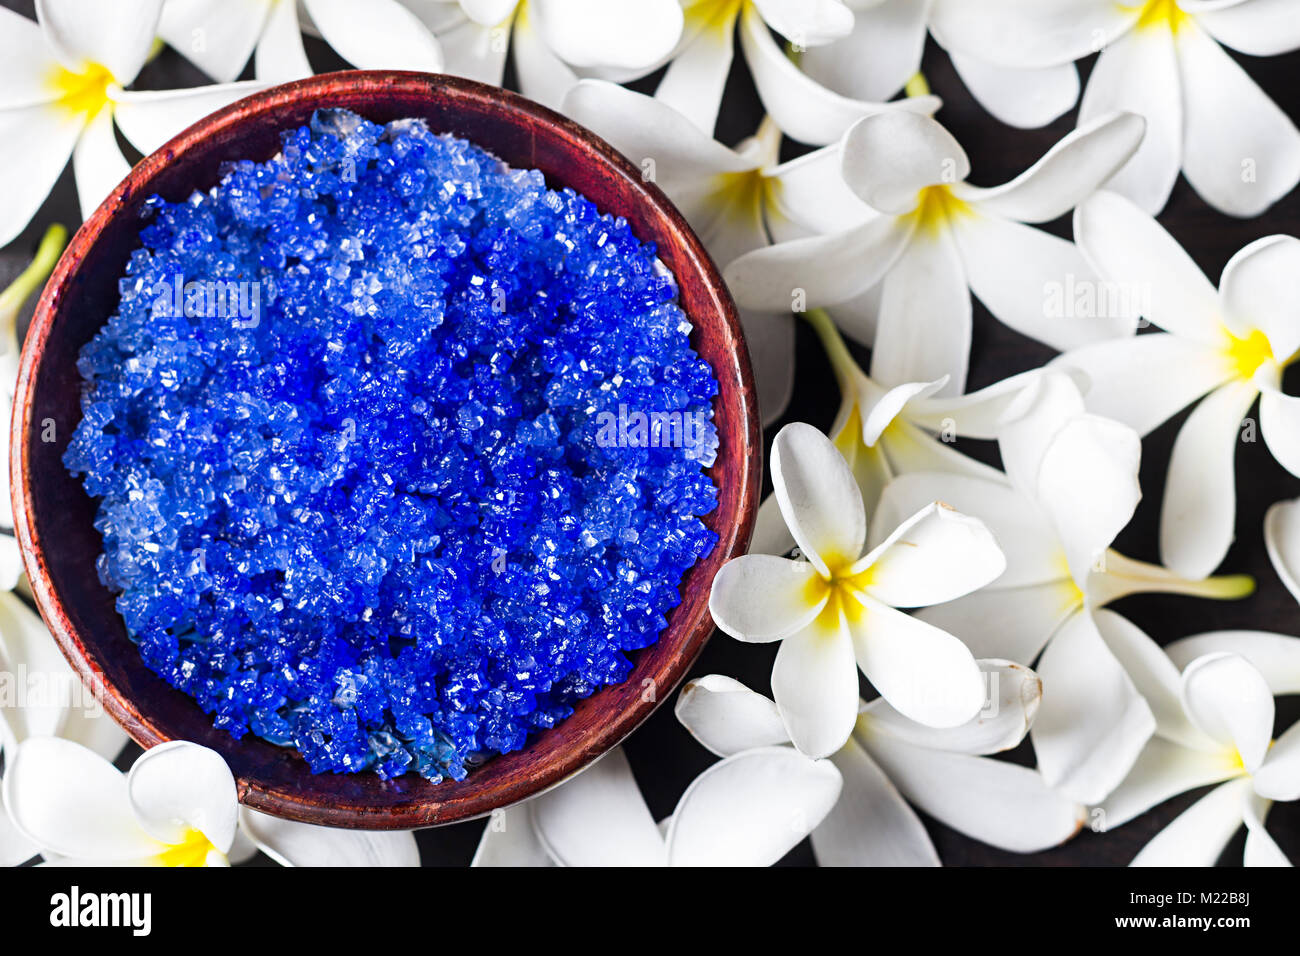 Beauty Spa Health Club Bowl Salt And Flower Herb Hygiene Stock Photo